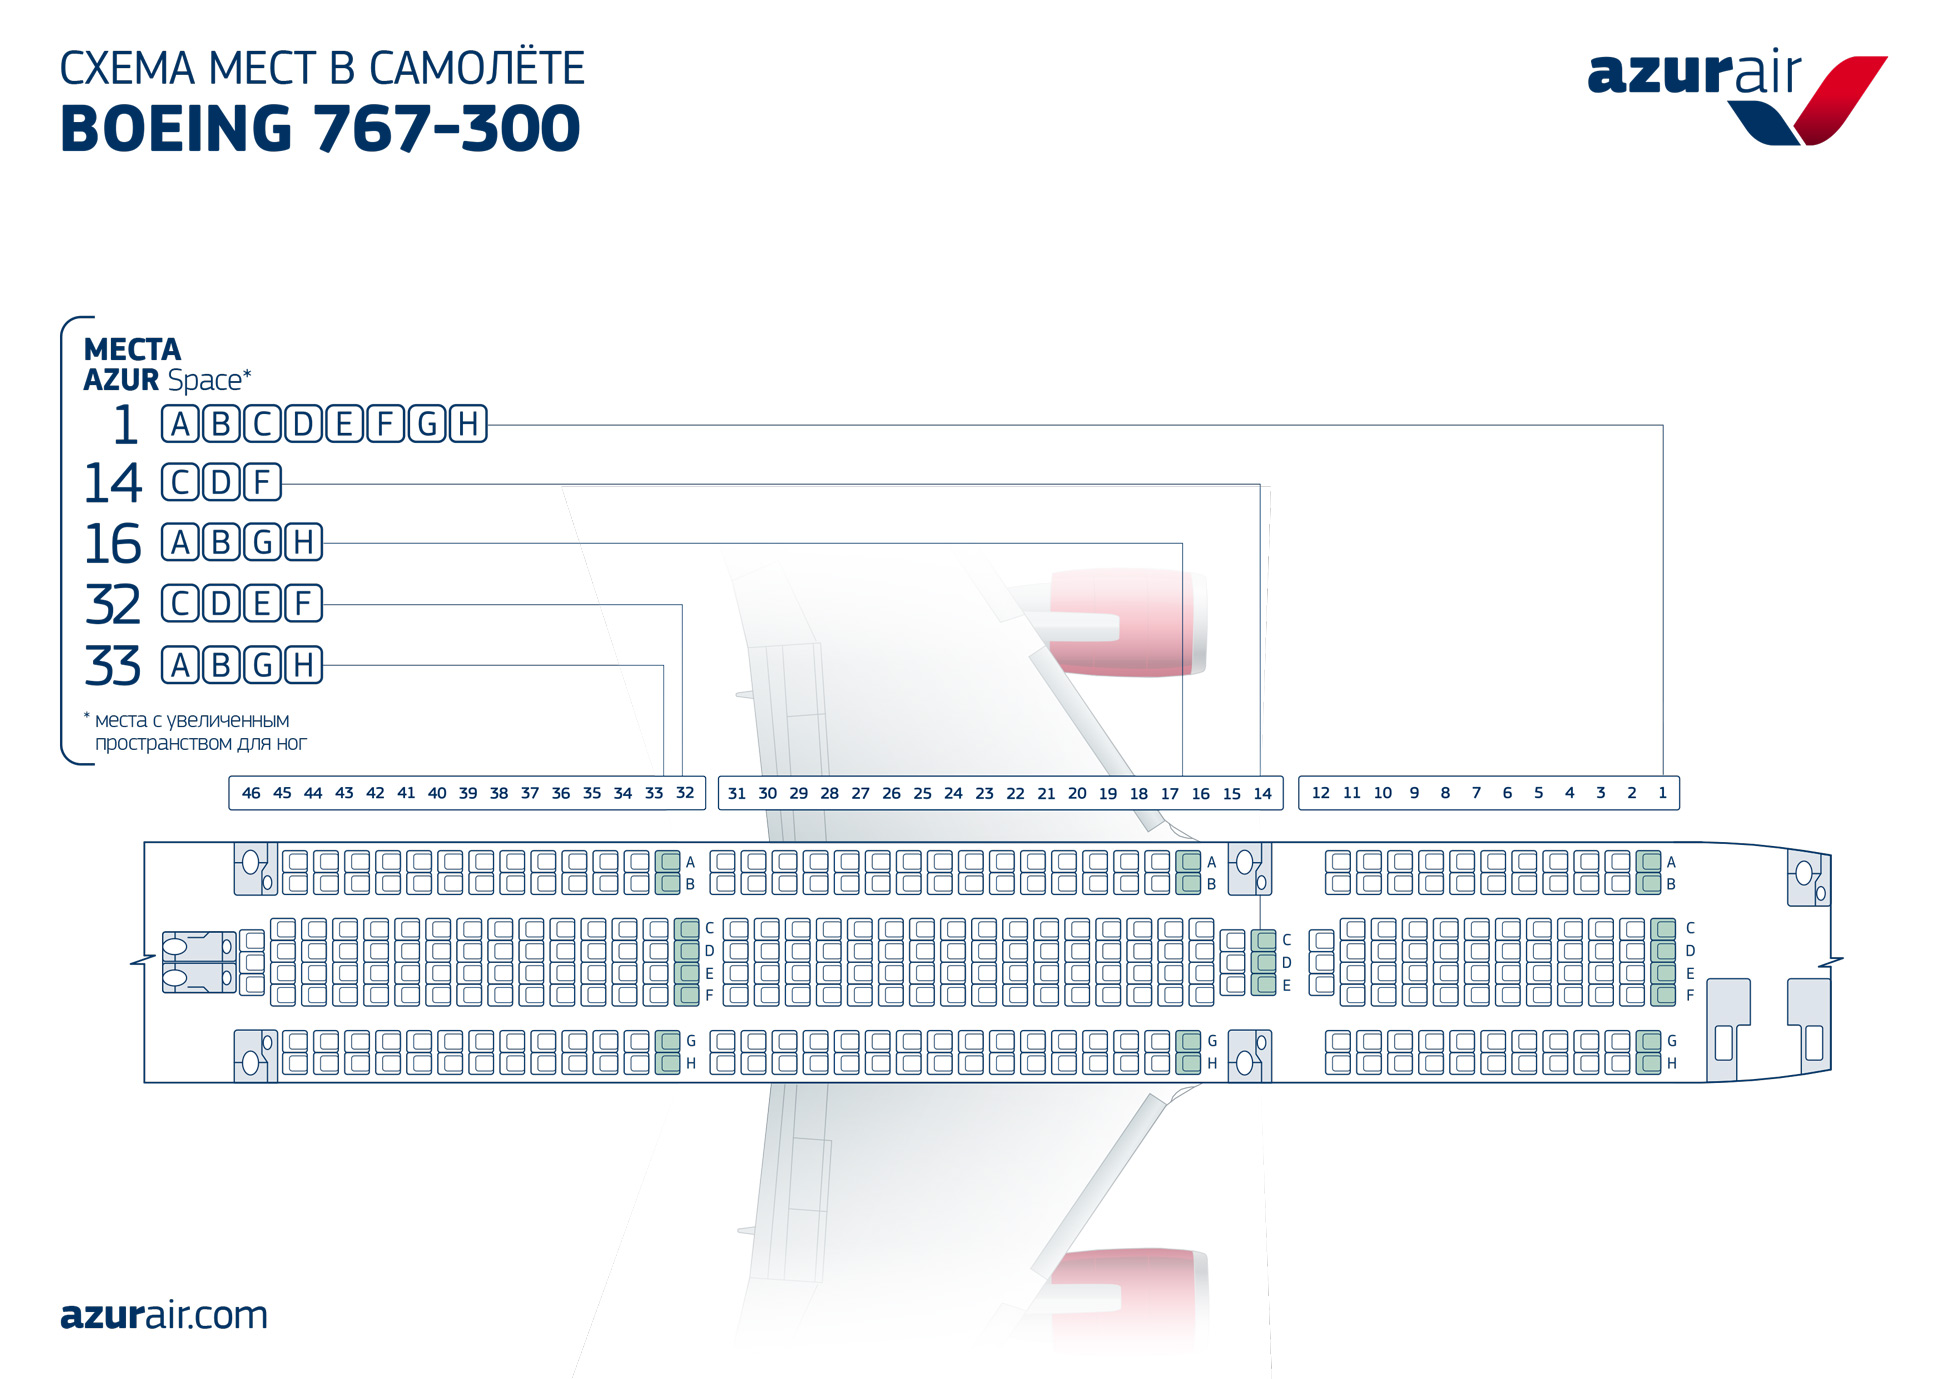 Azur air Azur-space Boeng 767-300 seats scheme